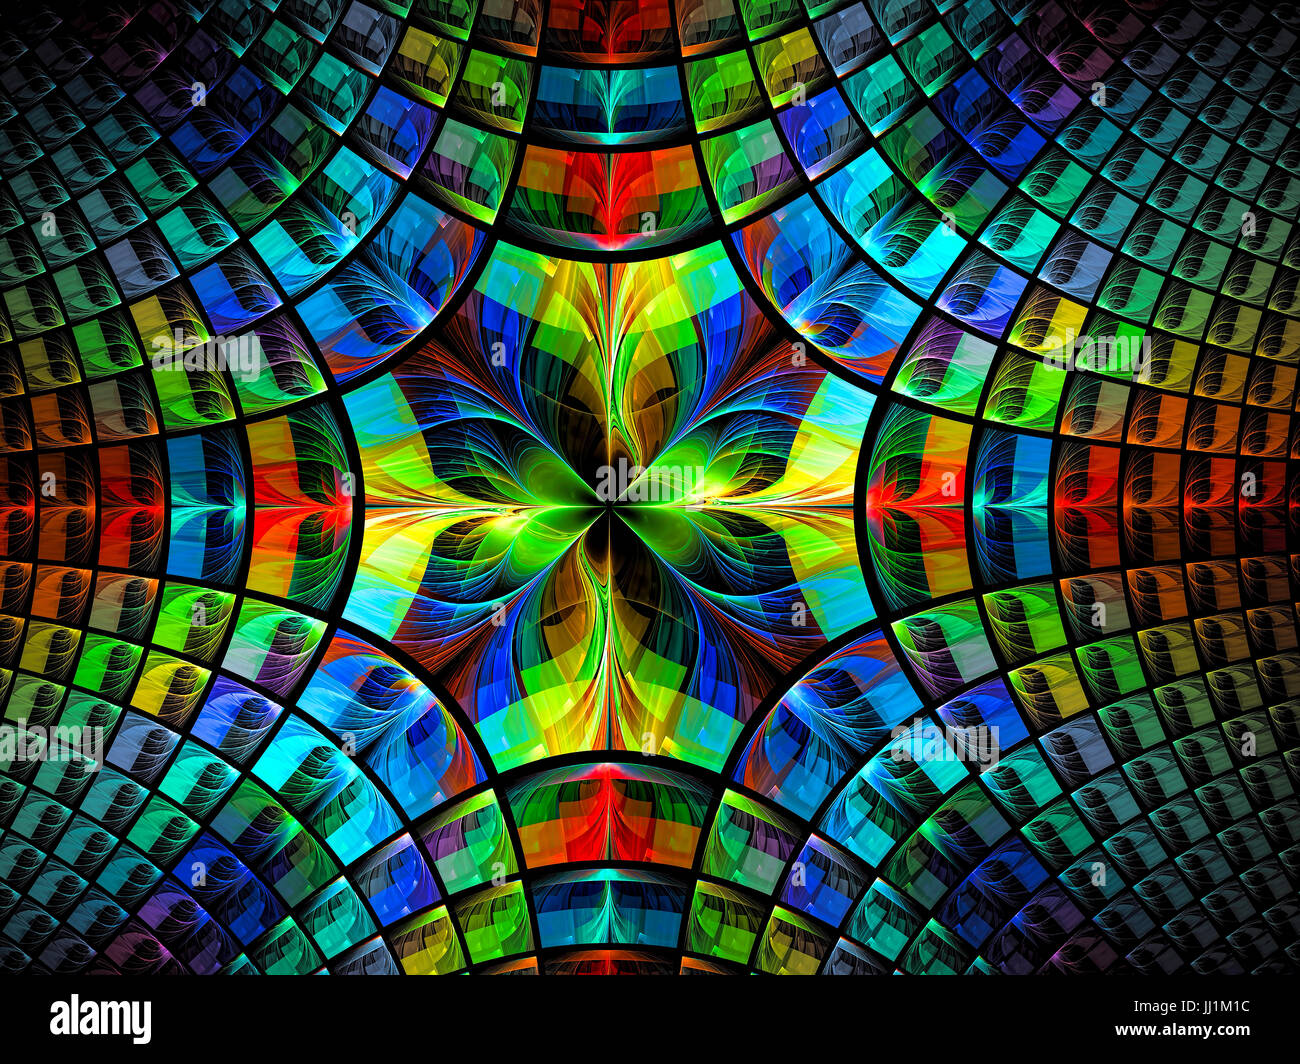 Bright kaleidoscope - abstract digitally generated image Stock Photo